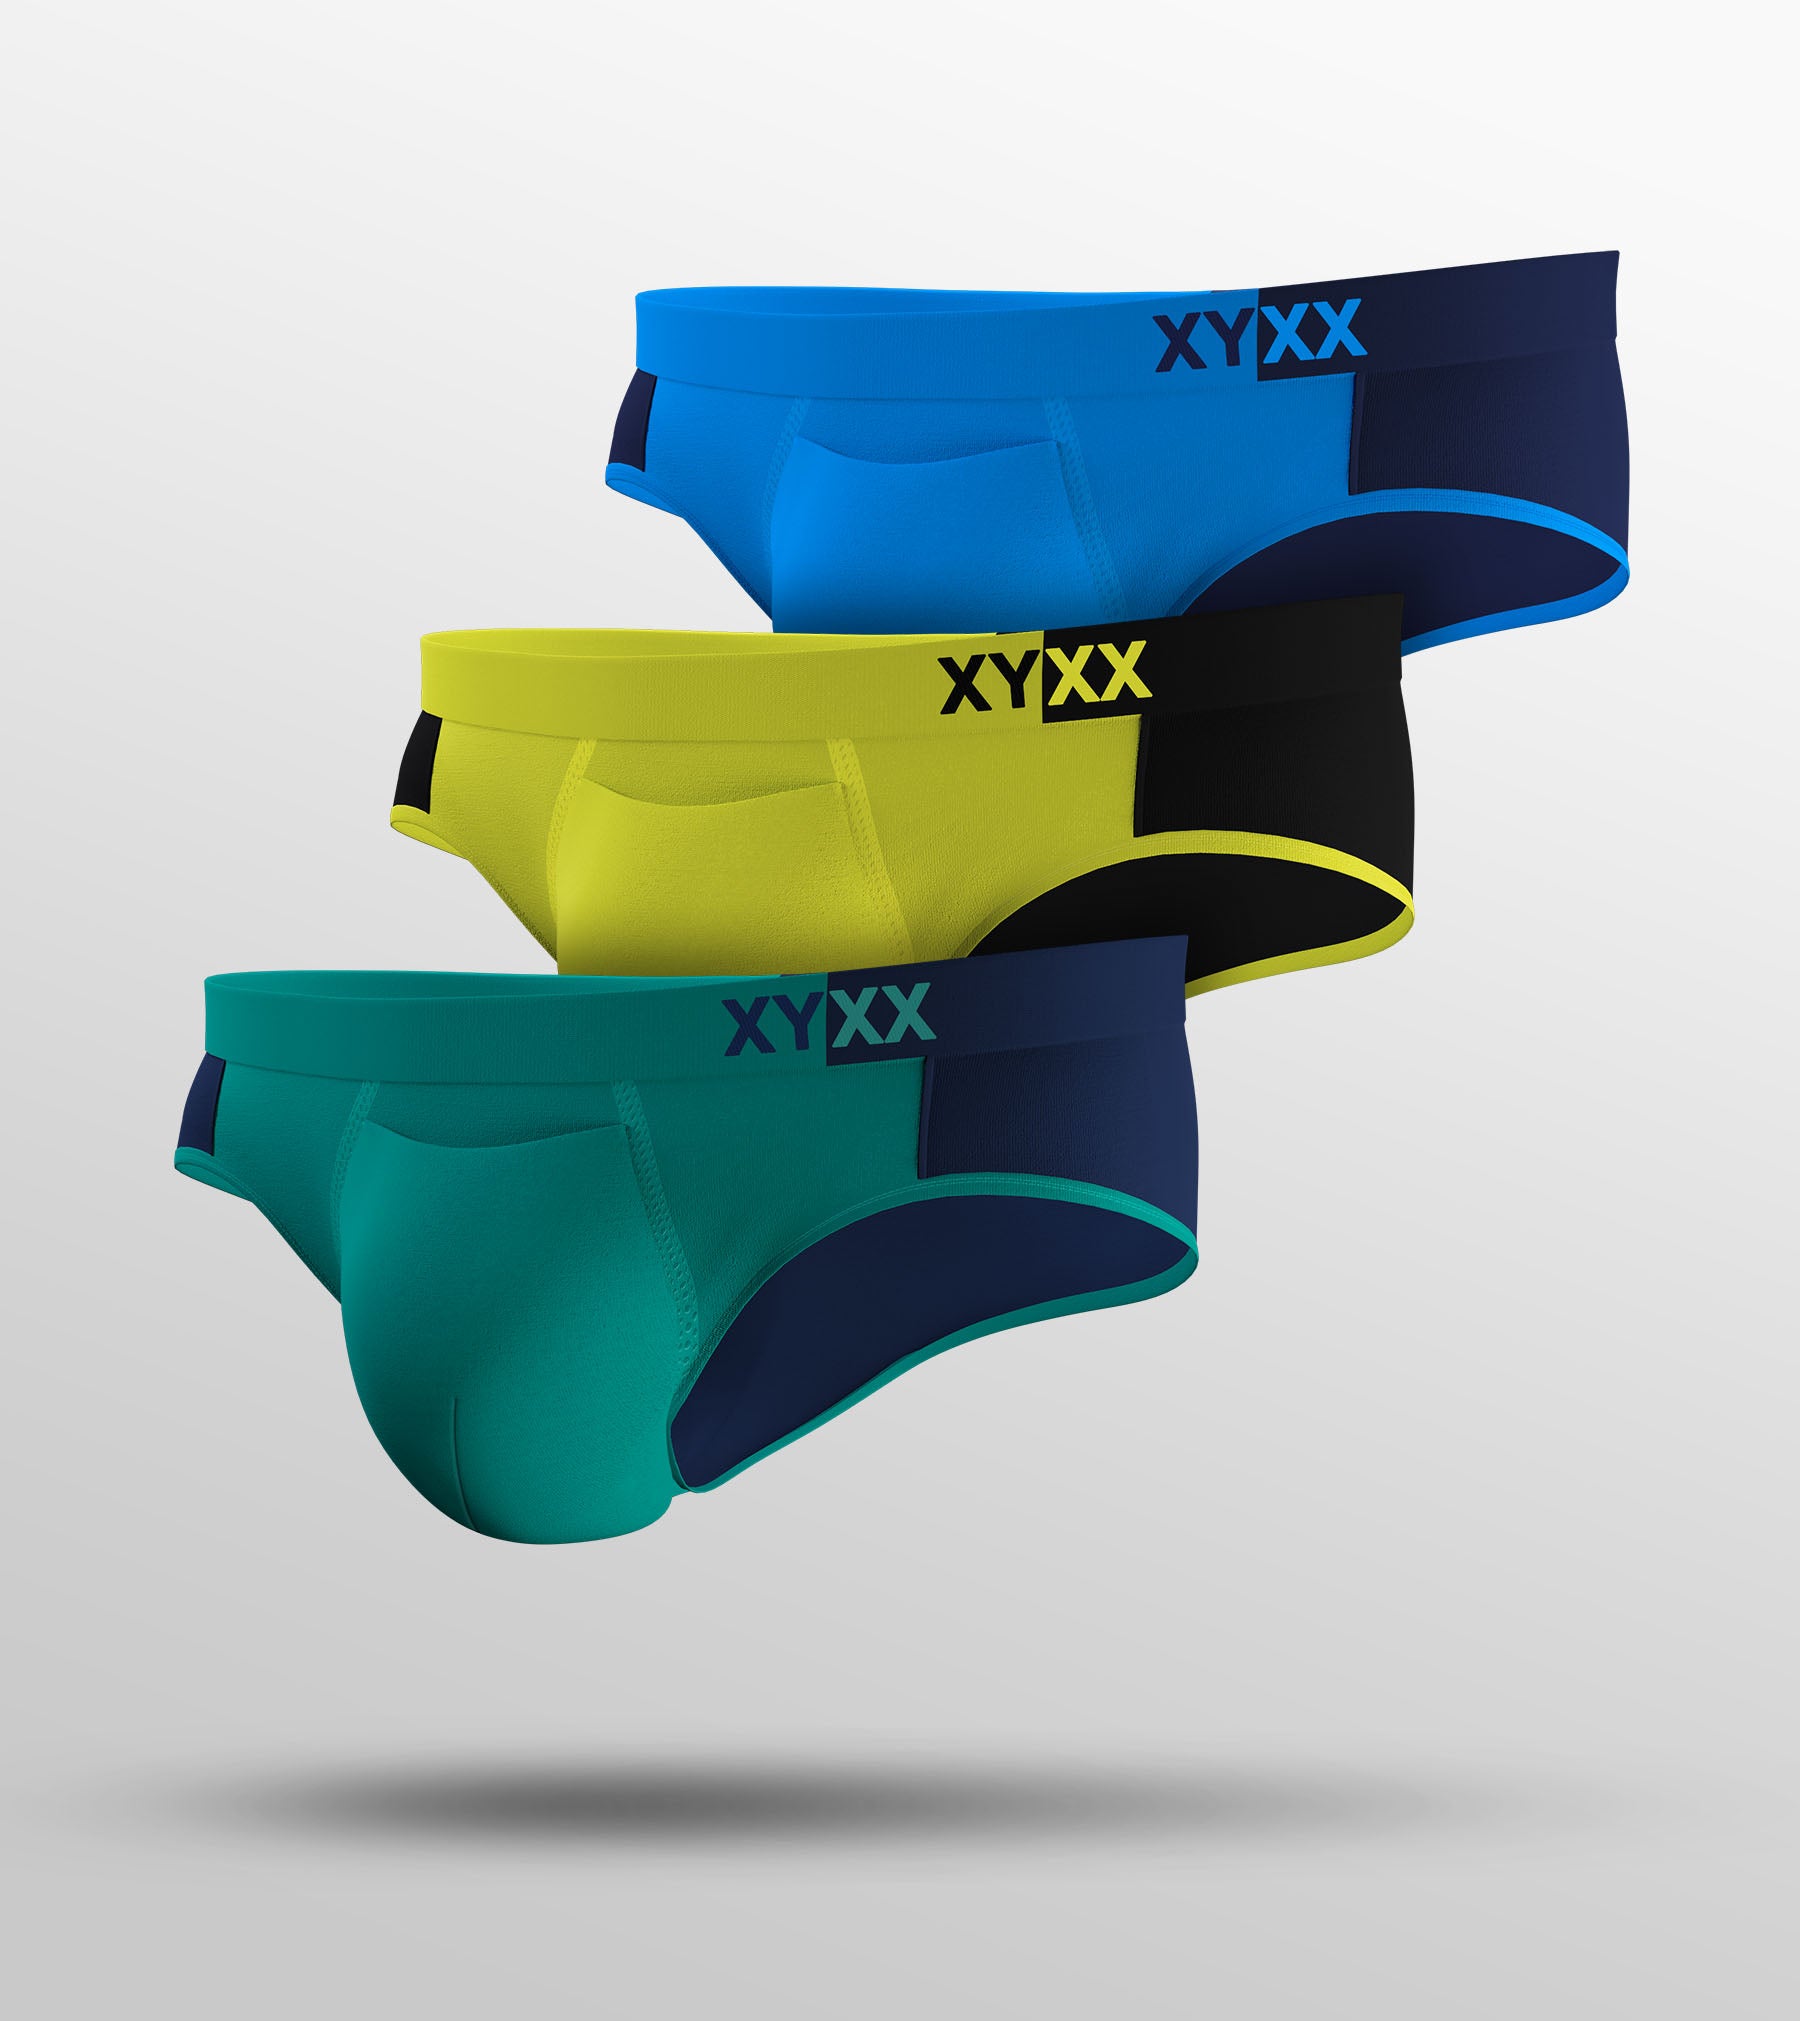 Dualist Modal Briefs For Men Pack of 3 (Aqua Blue, Lime Yellow, Blue) -  XYXX Mens Apparels